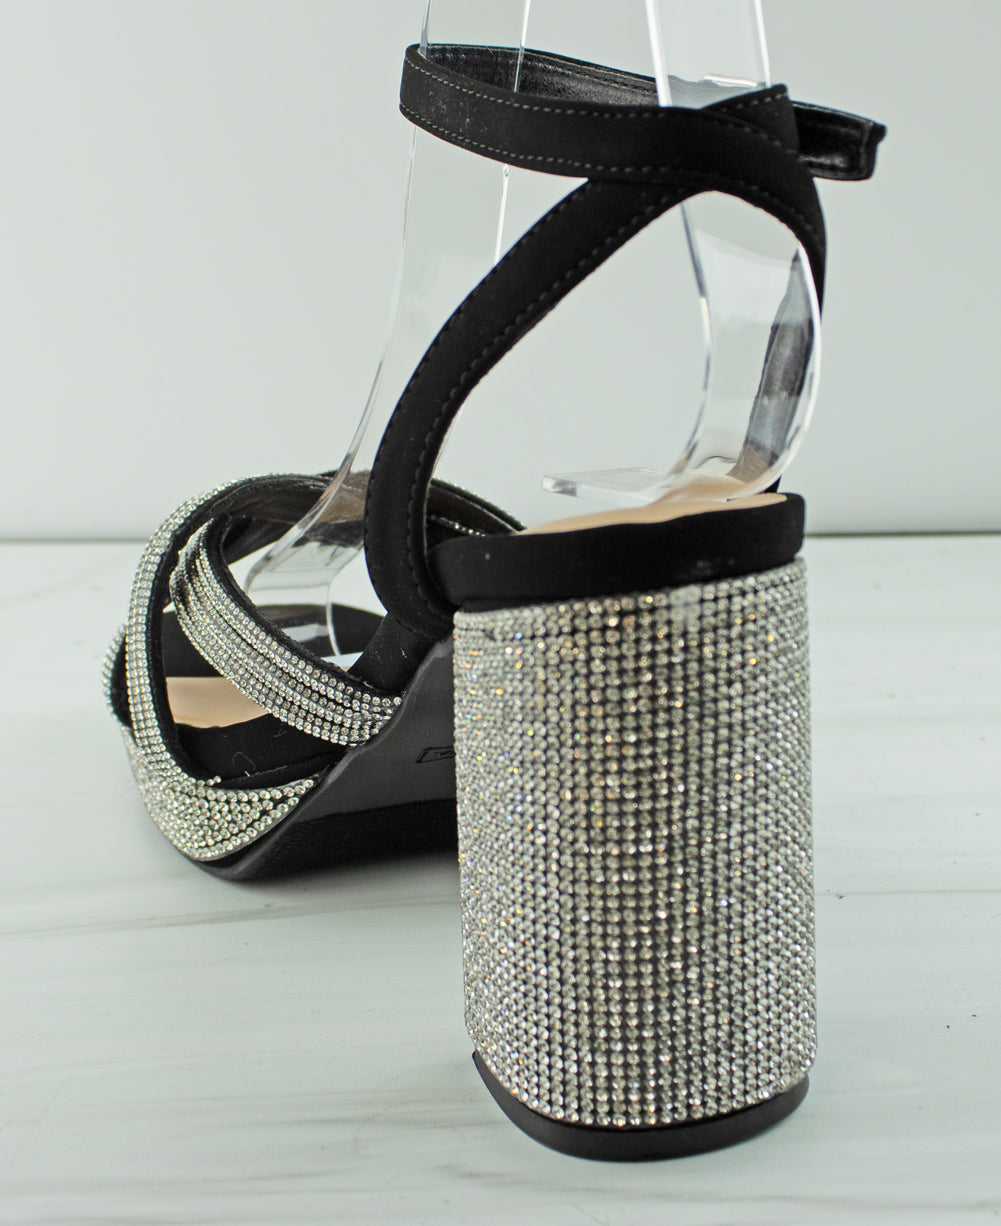 PixieGirl Silver Diamante Strap Mid Block Heel Sandals In Standard Fit |  PixieGirl